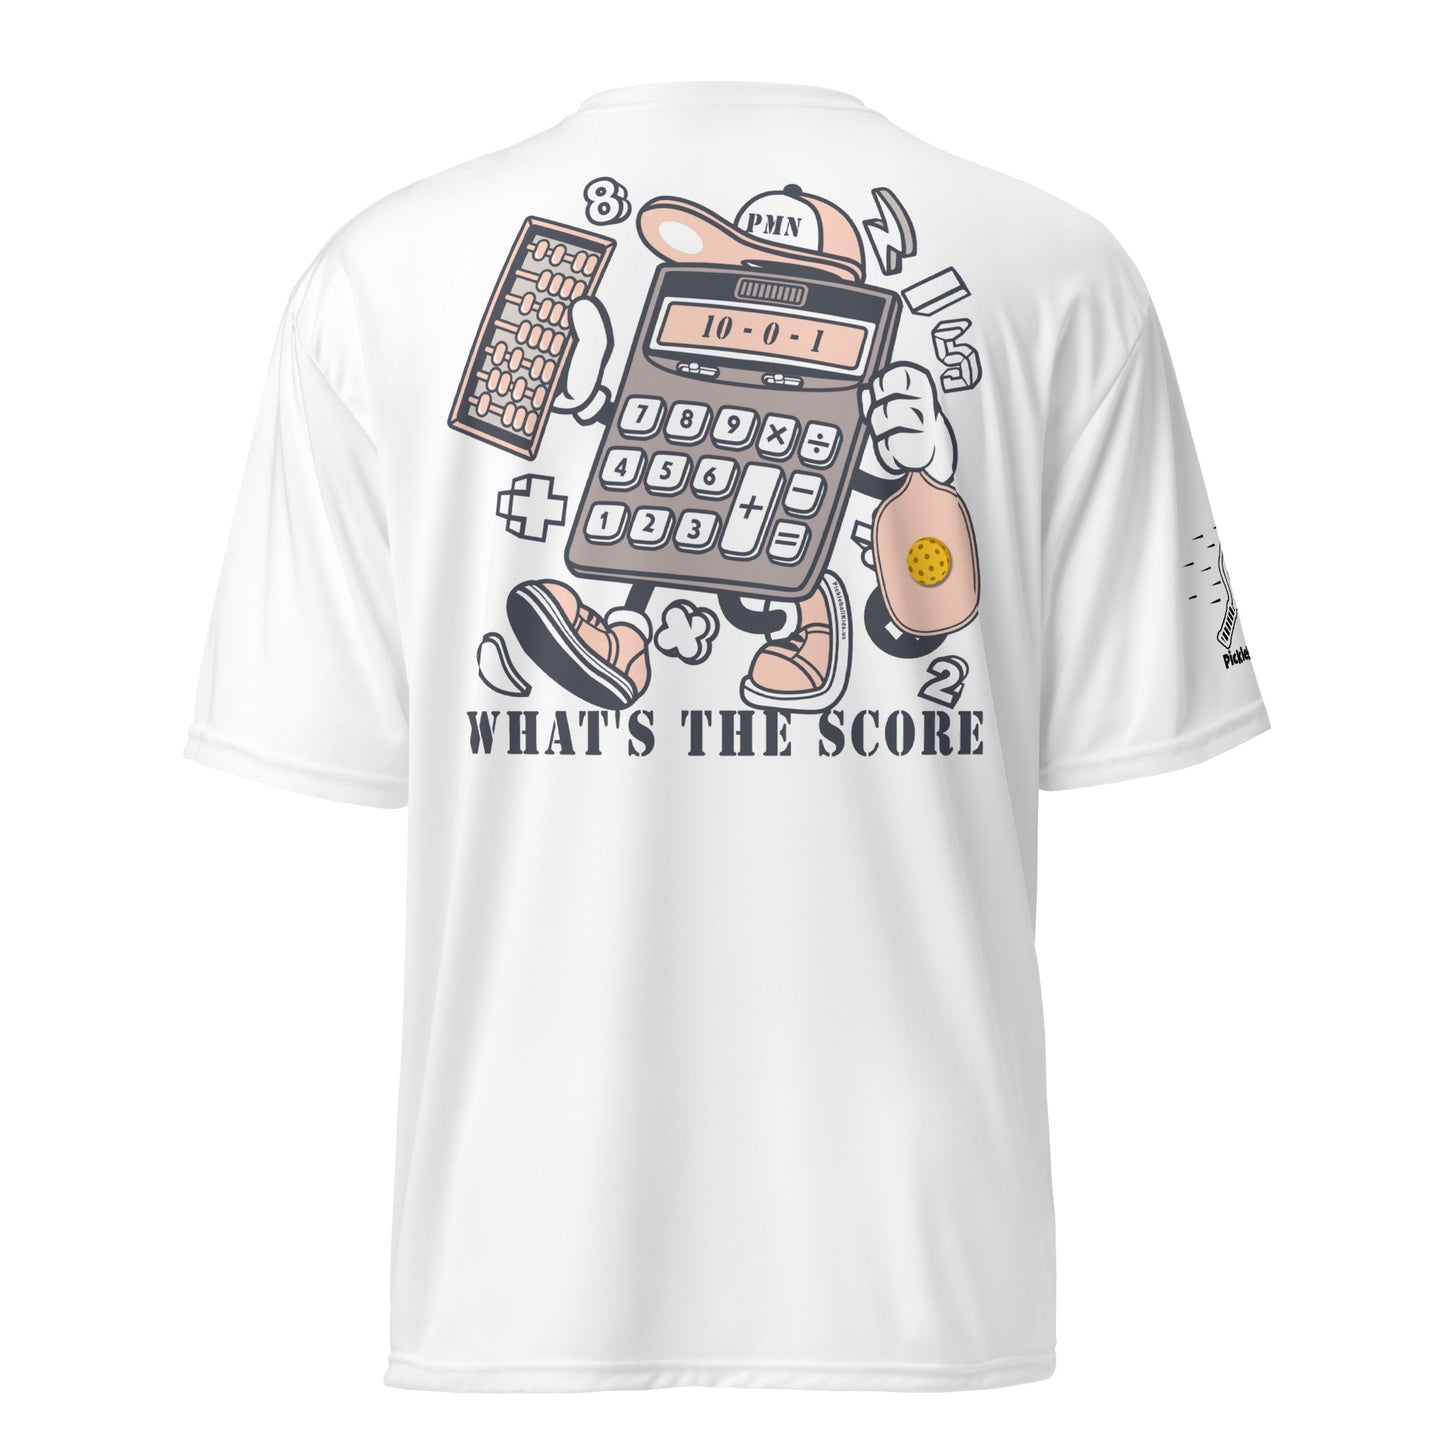 "What's The Score" Unisex Performance Crew Neck T-Shirt